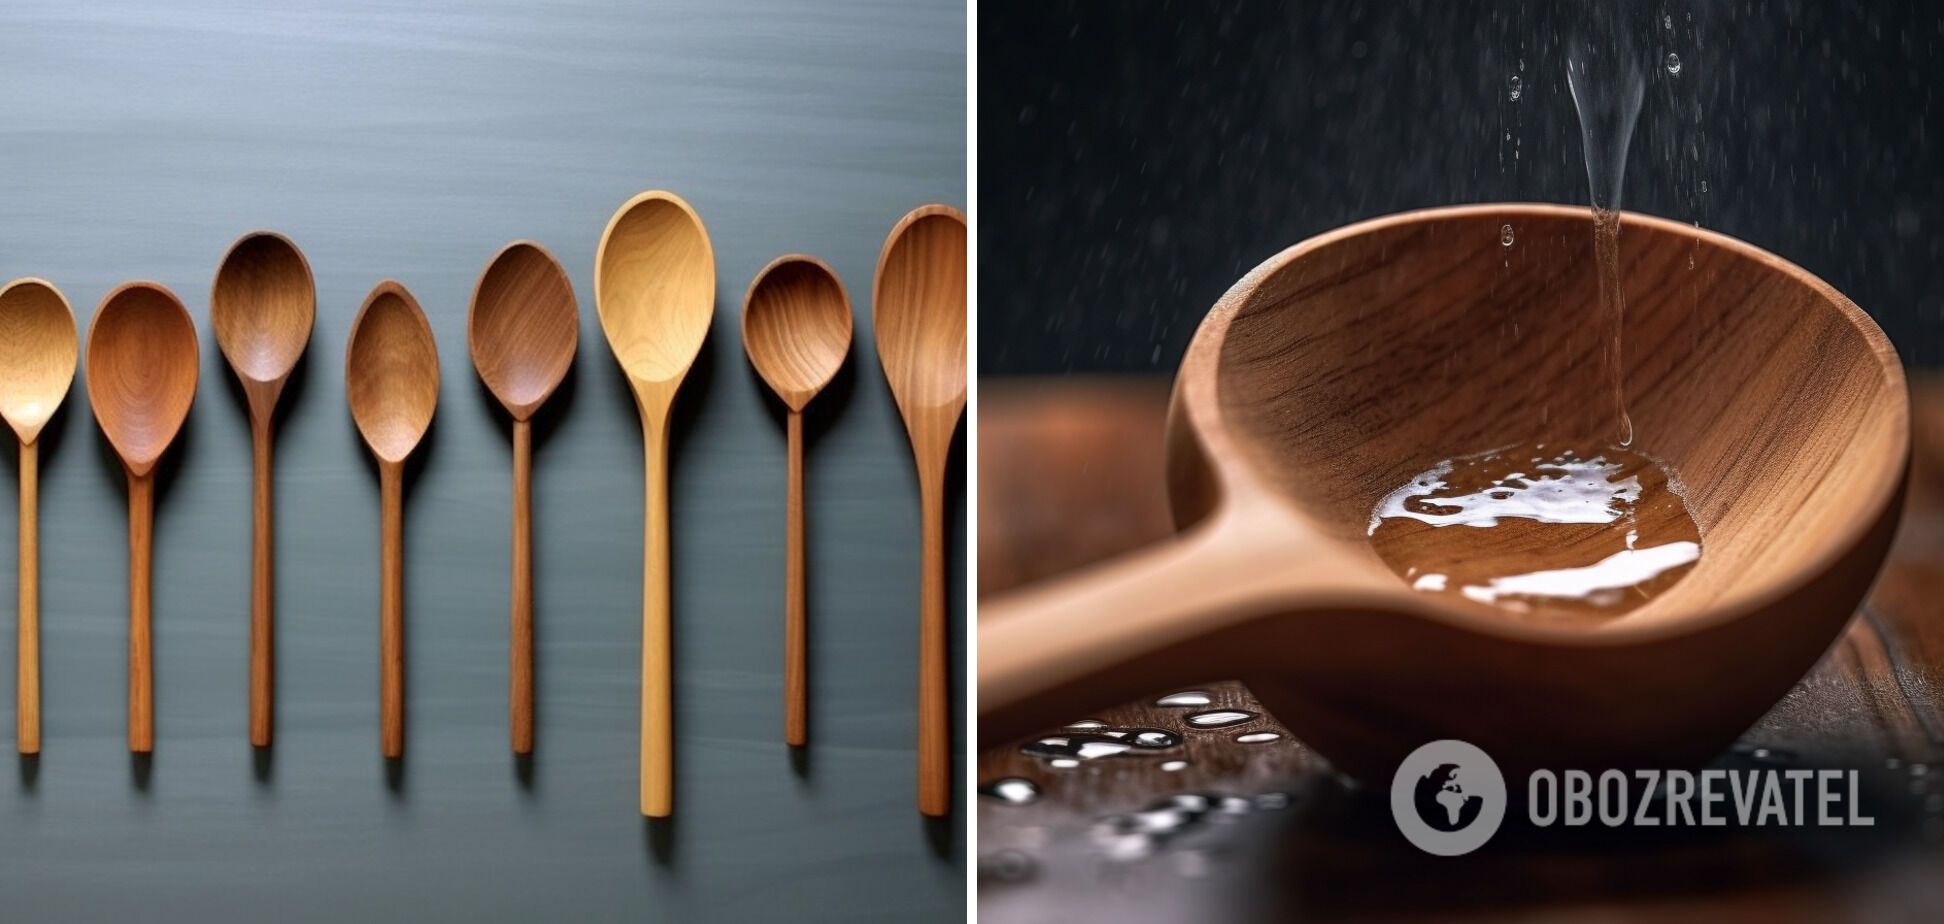 How to wash wooden utensils